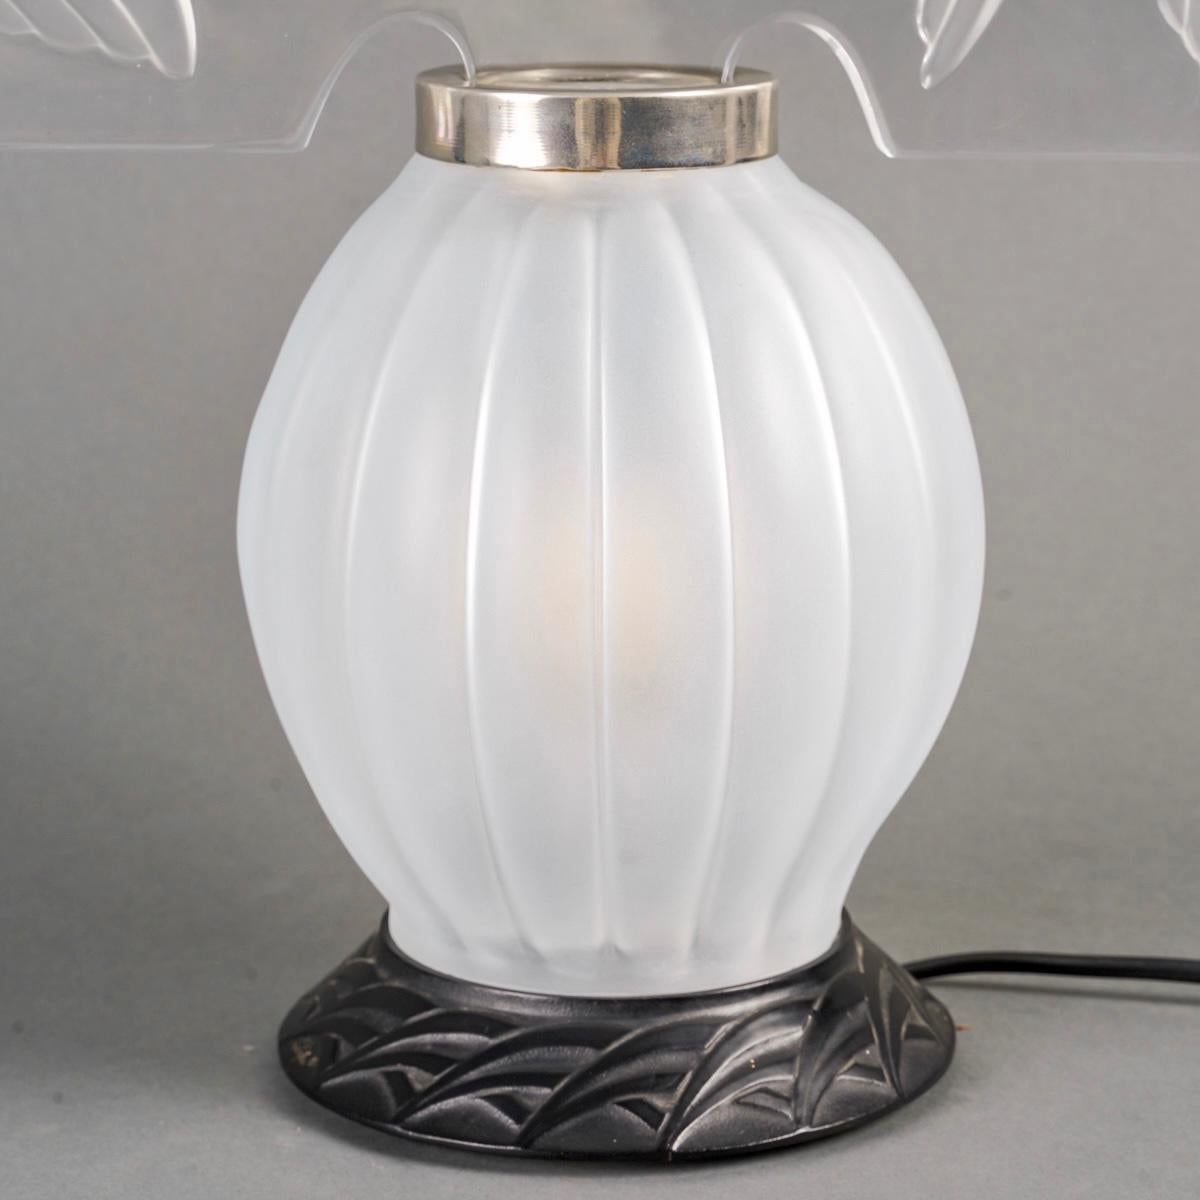 Fin du 20e siècle Lampe Marie Claude Lalique, 1900, cristal Hokkaido 